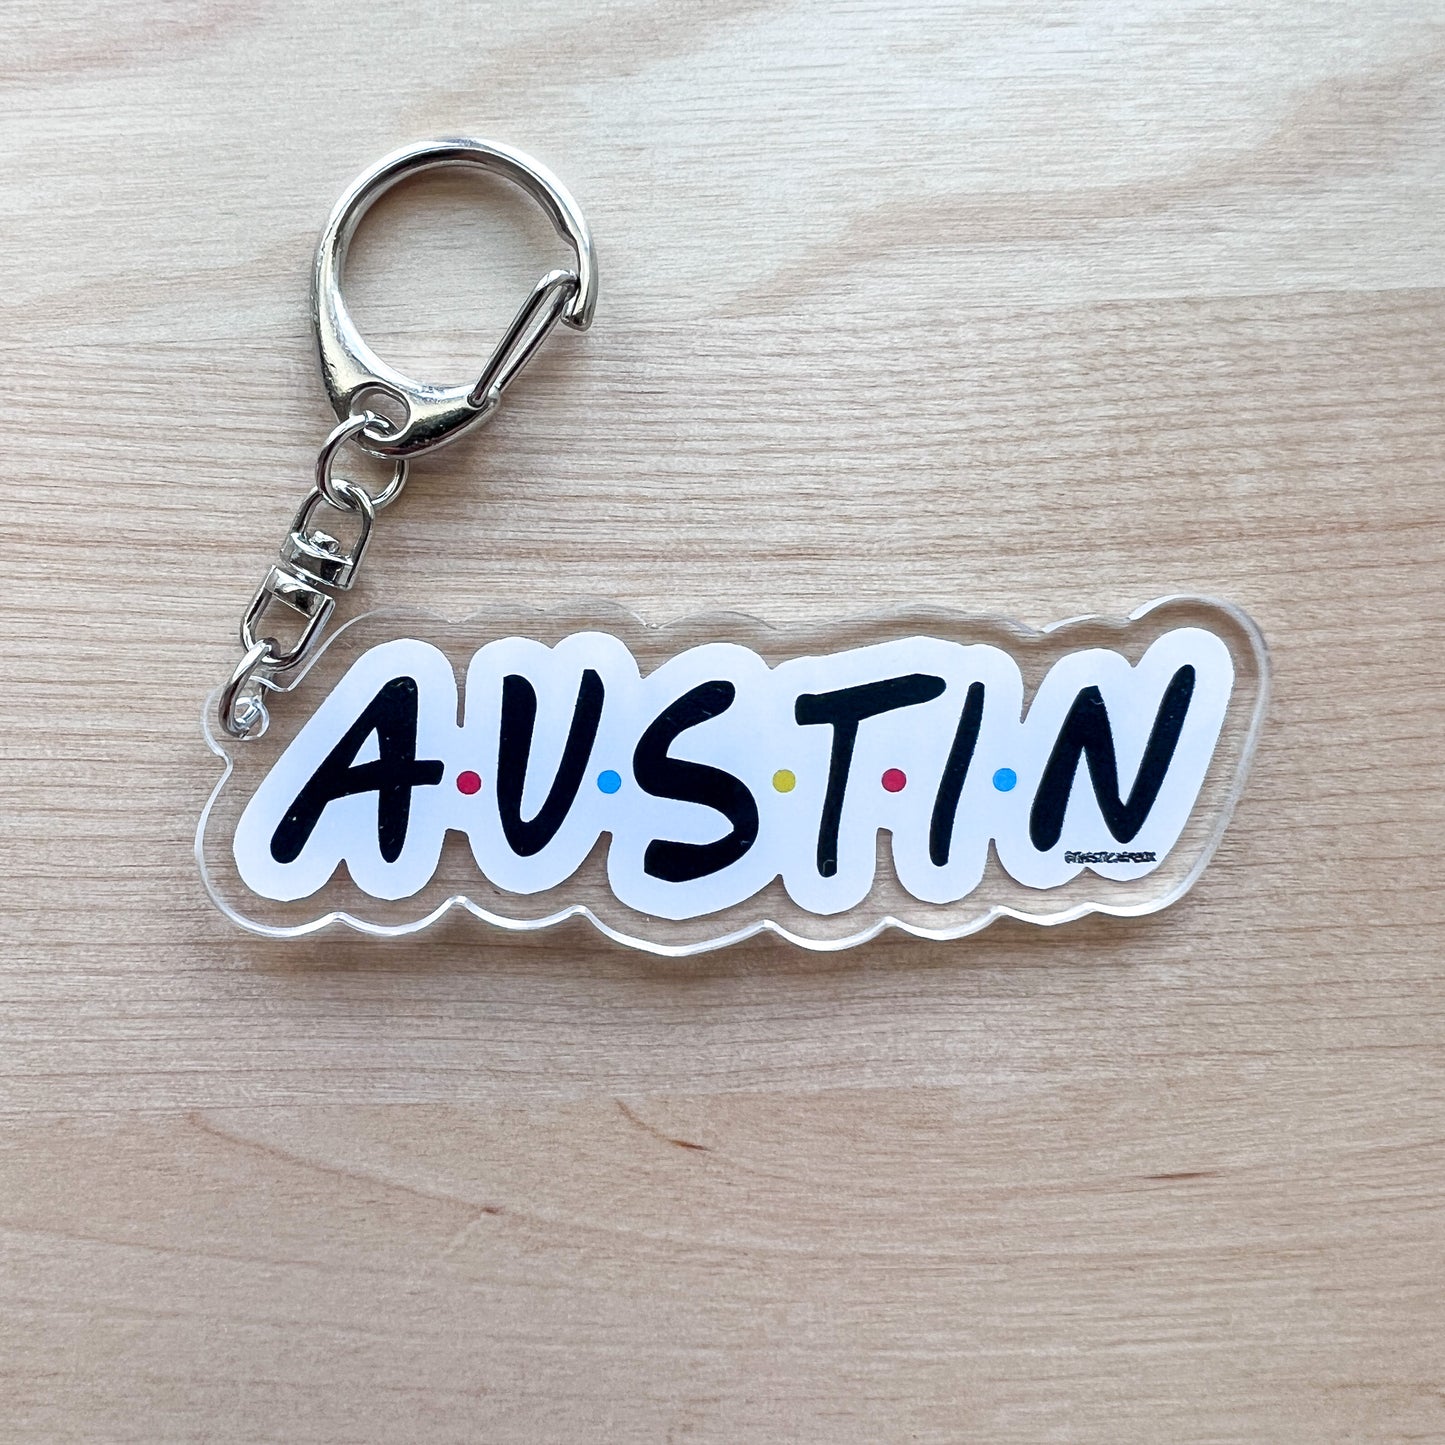 Austin Friends Keychain